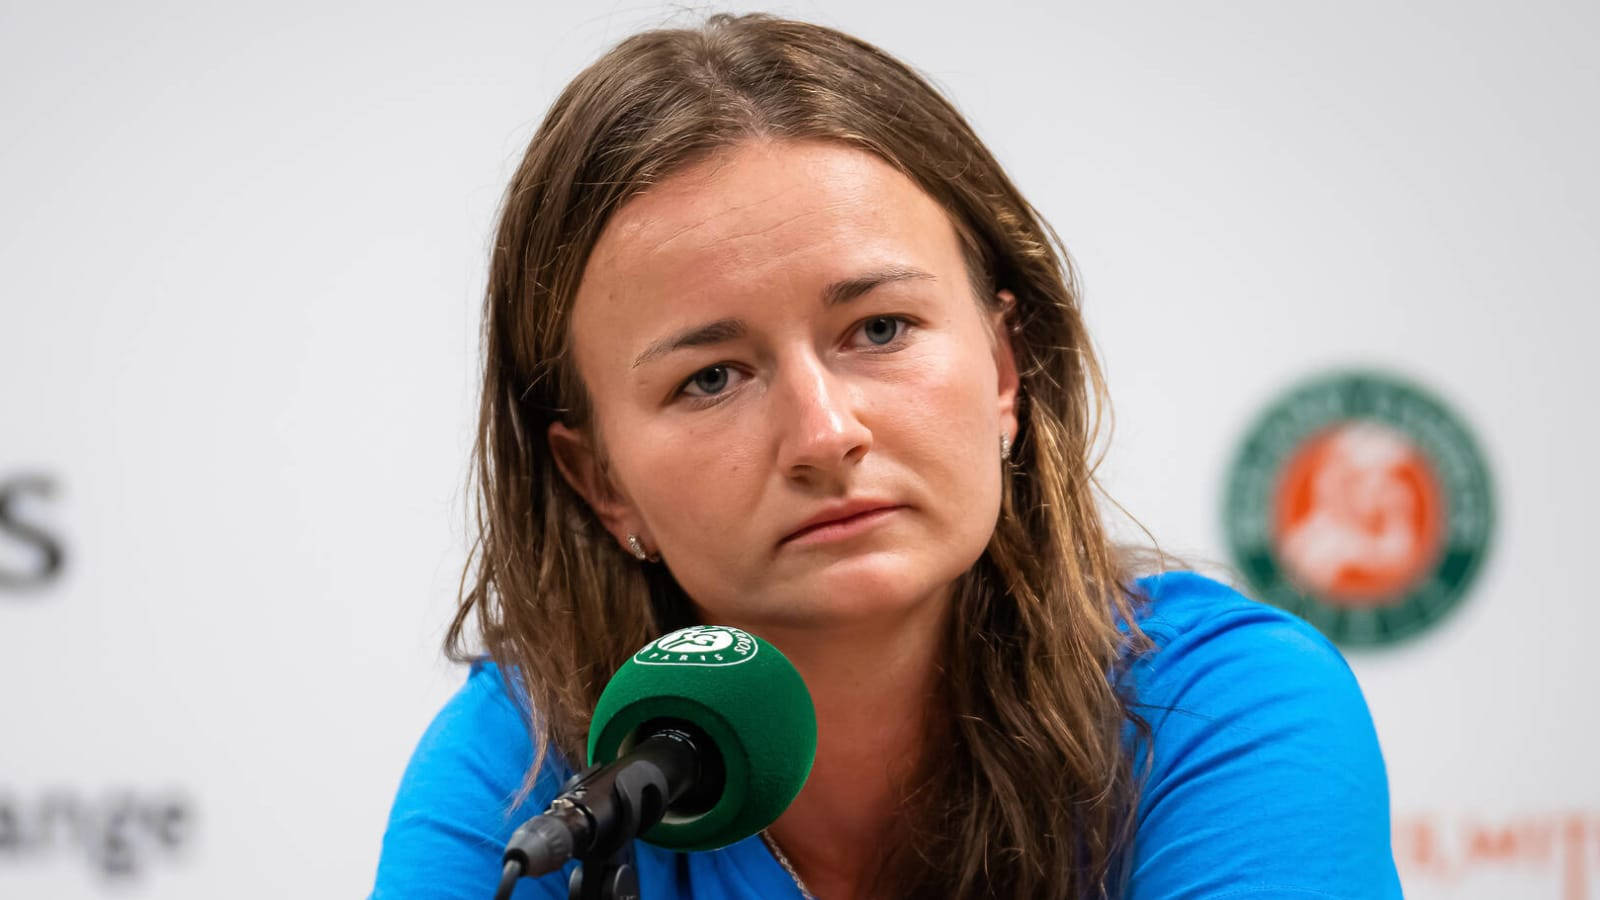 Tennis Player Barbora Krejcikova 2022 Australian Open Wallpaper